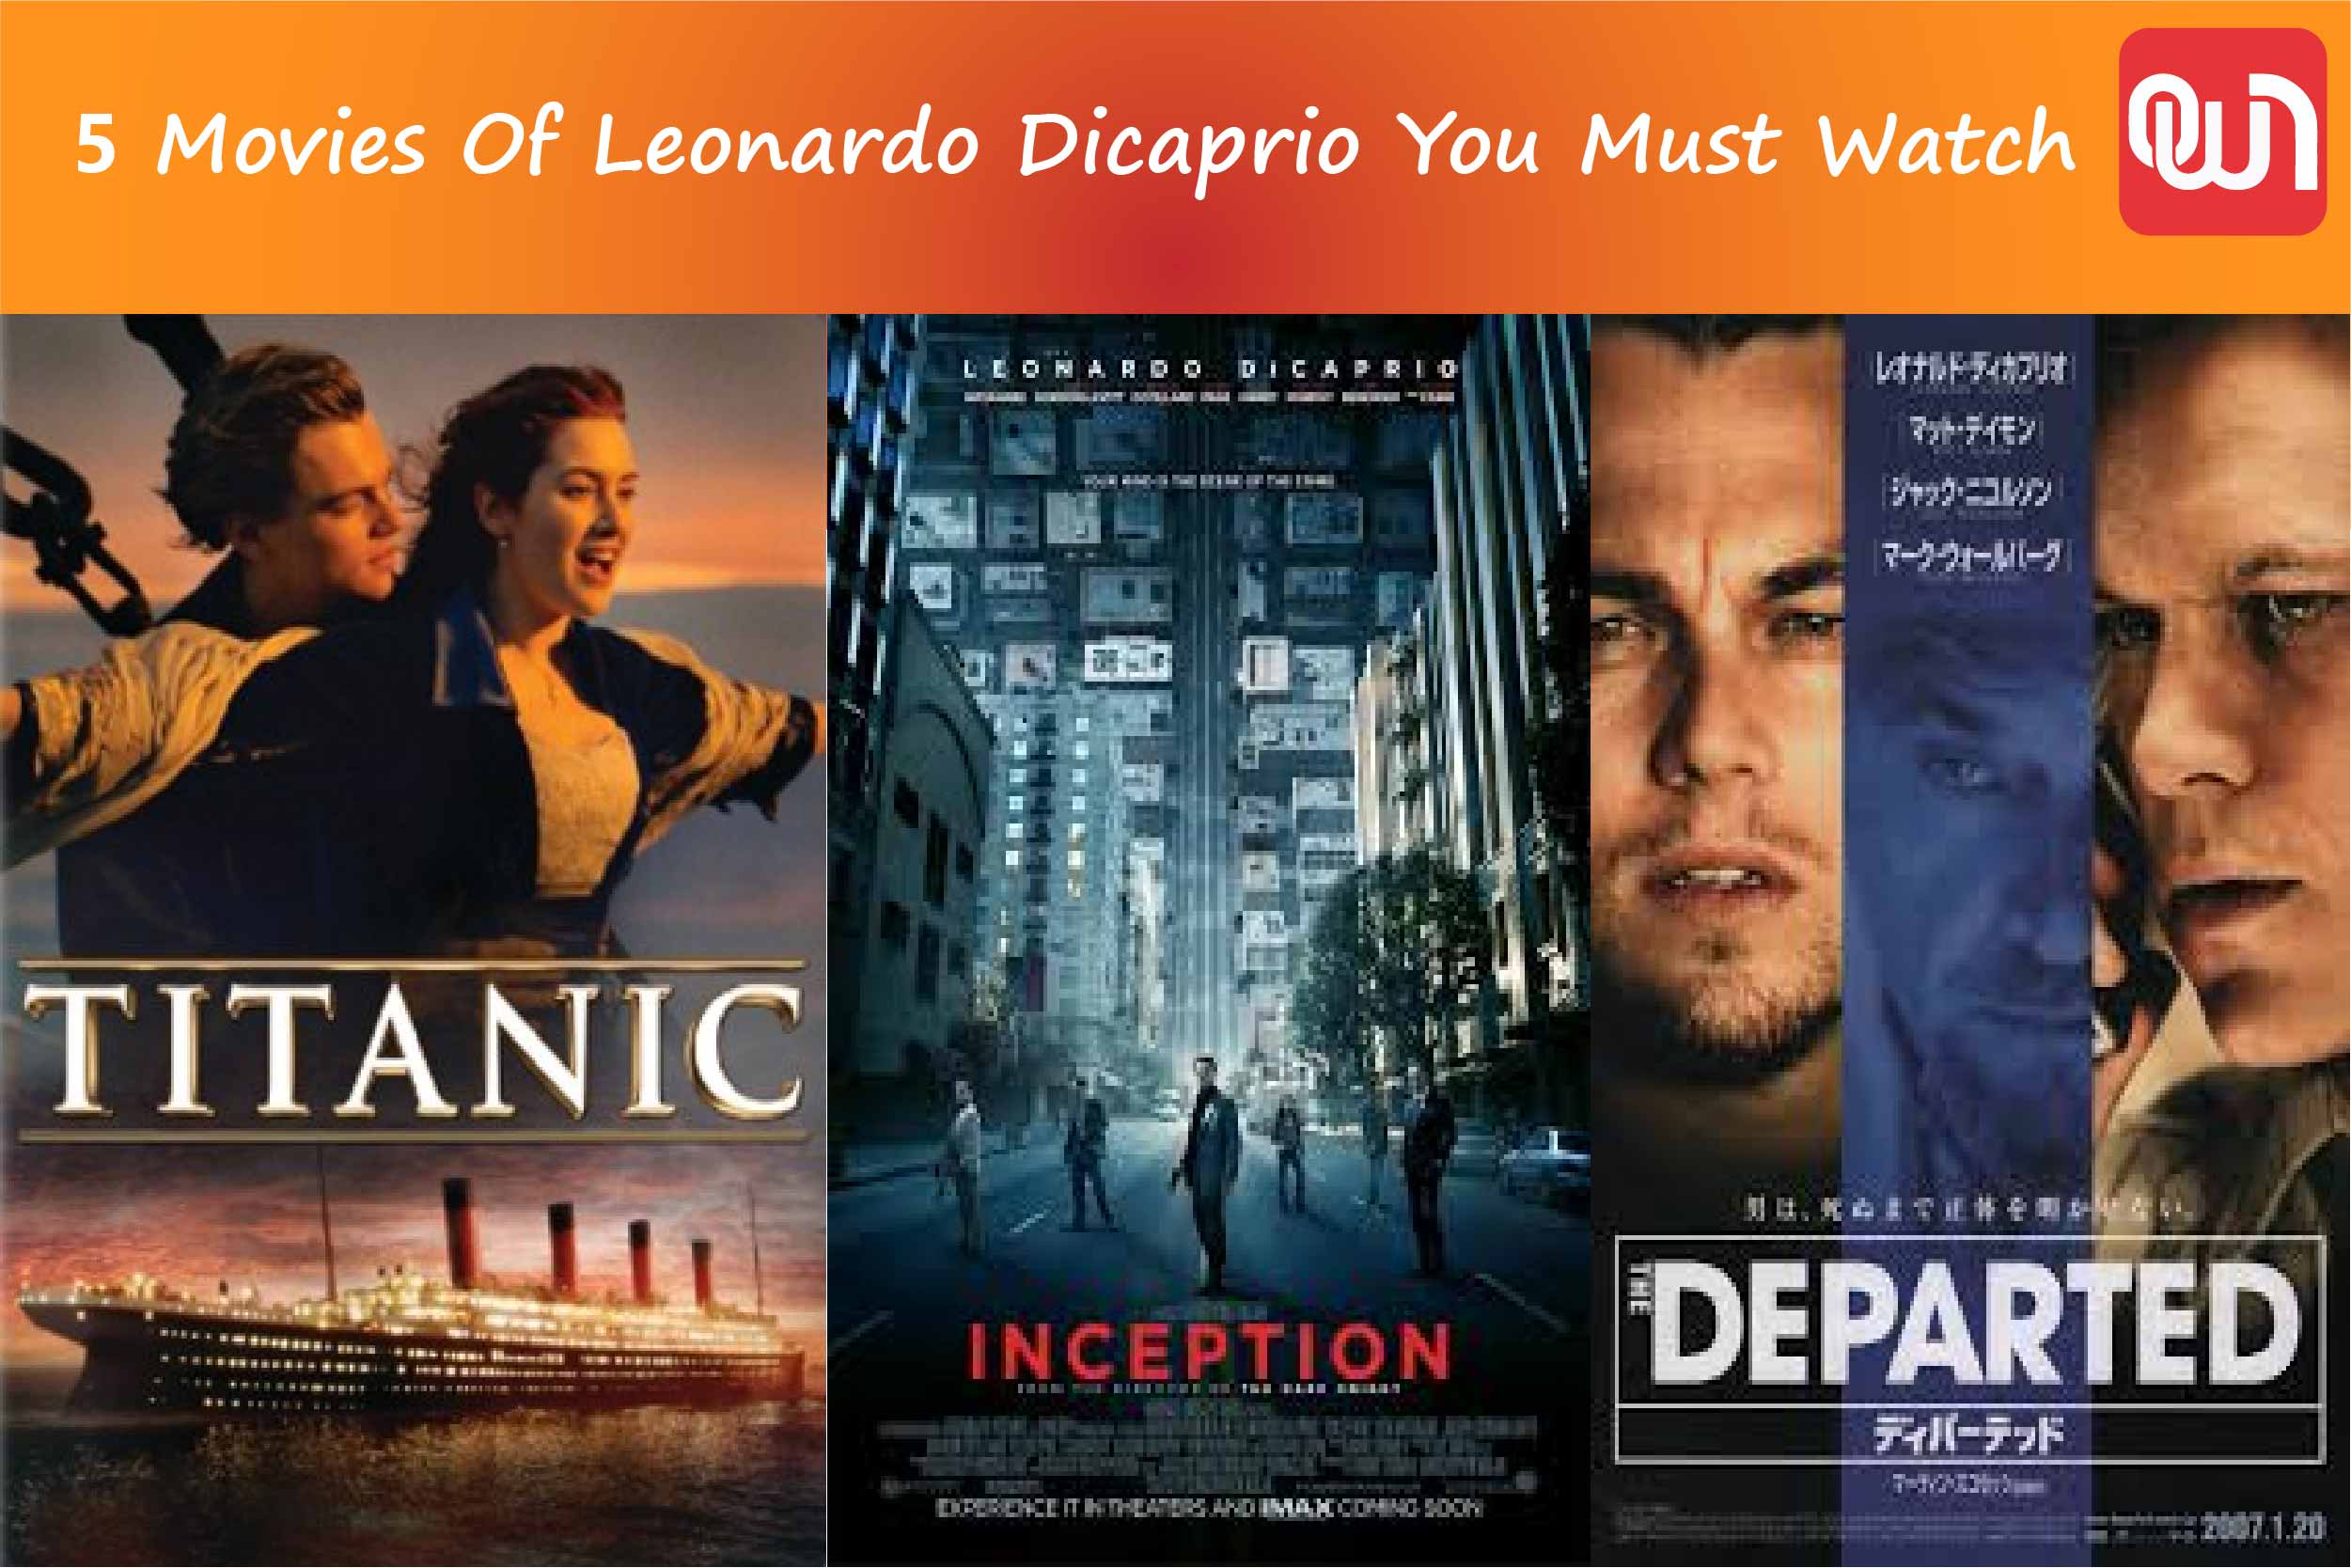 5 Movies Of Leonardo Dicaprio You Must Watch (1)